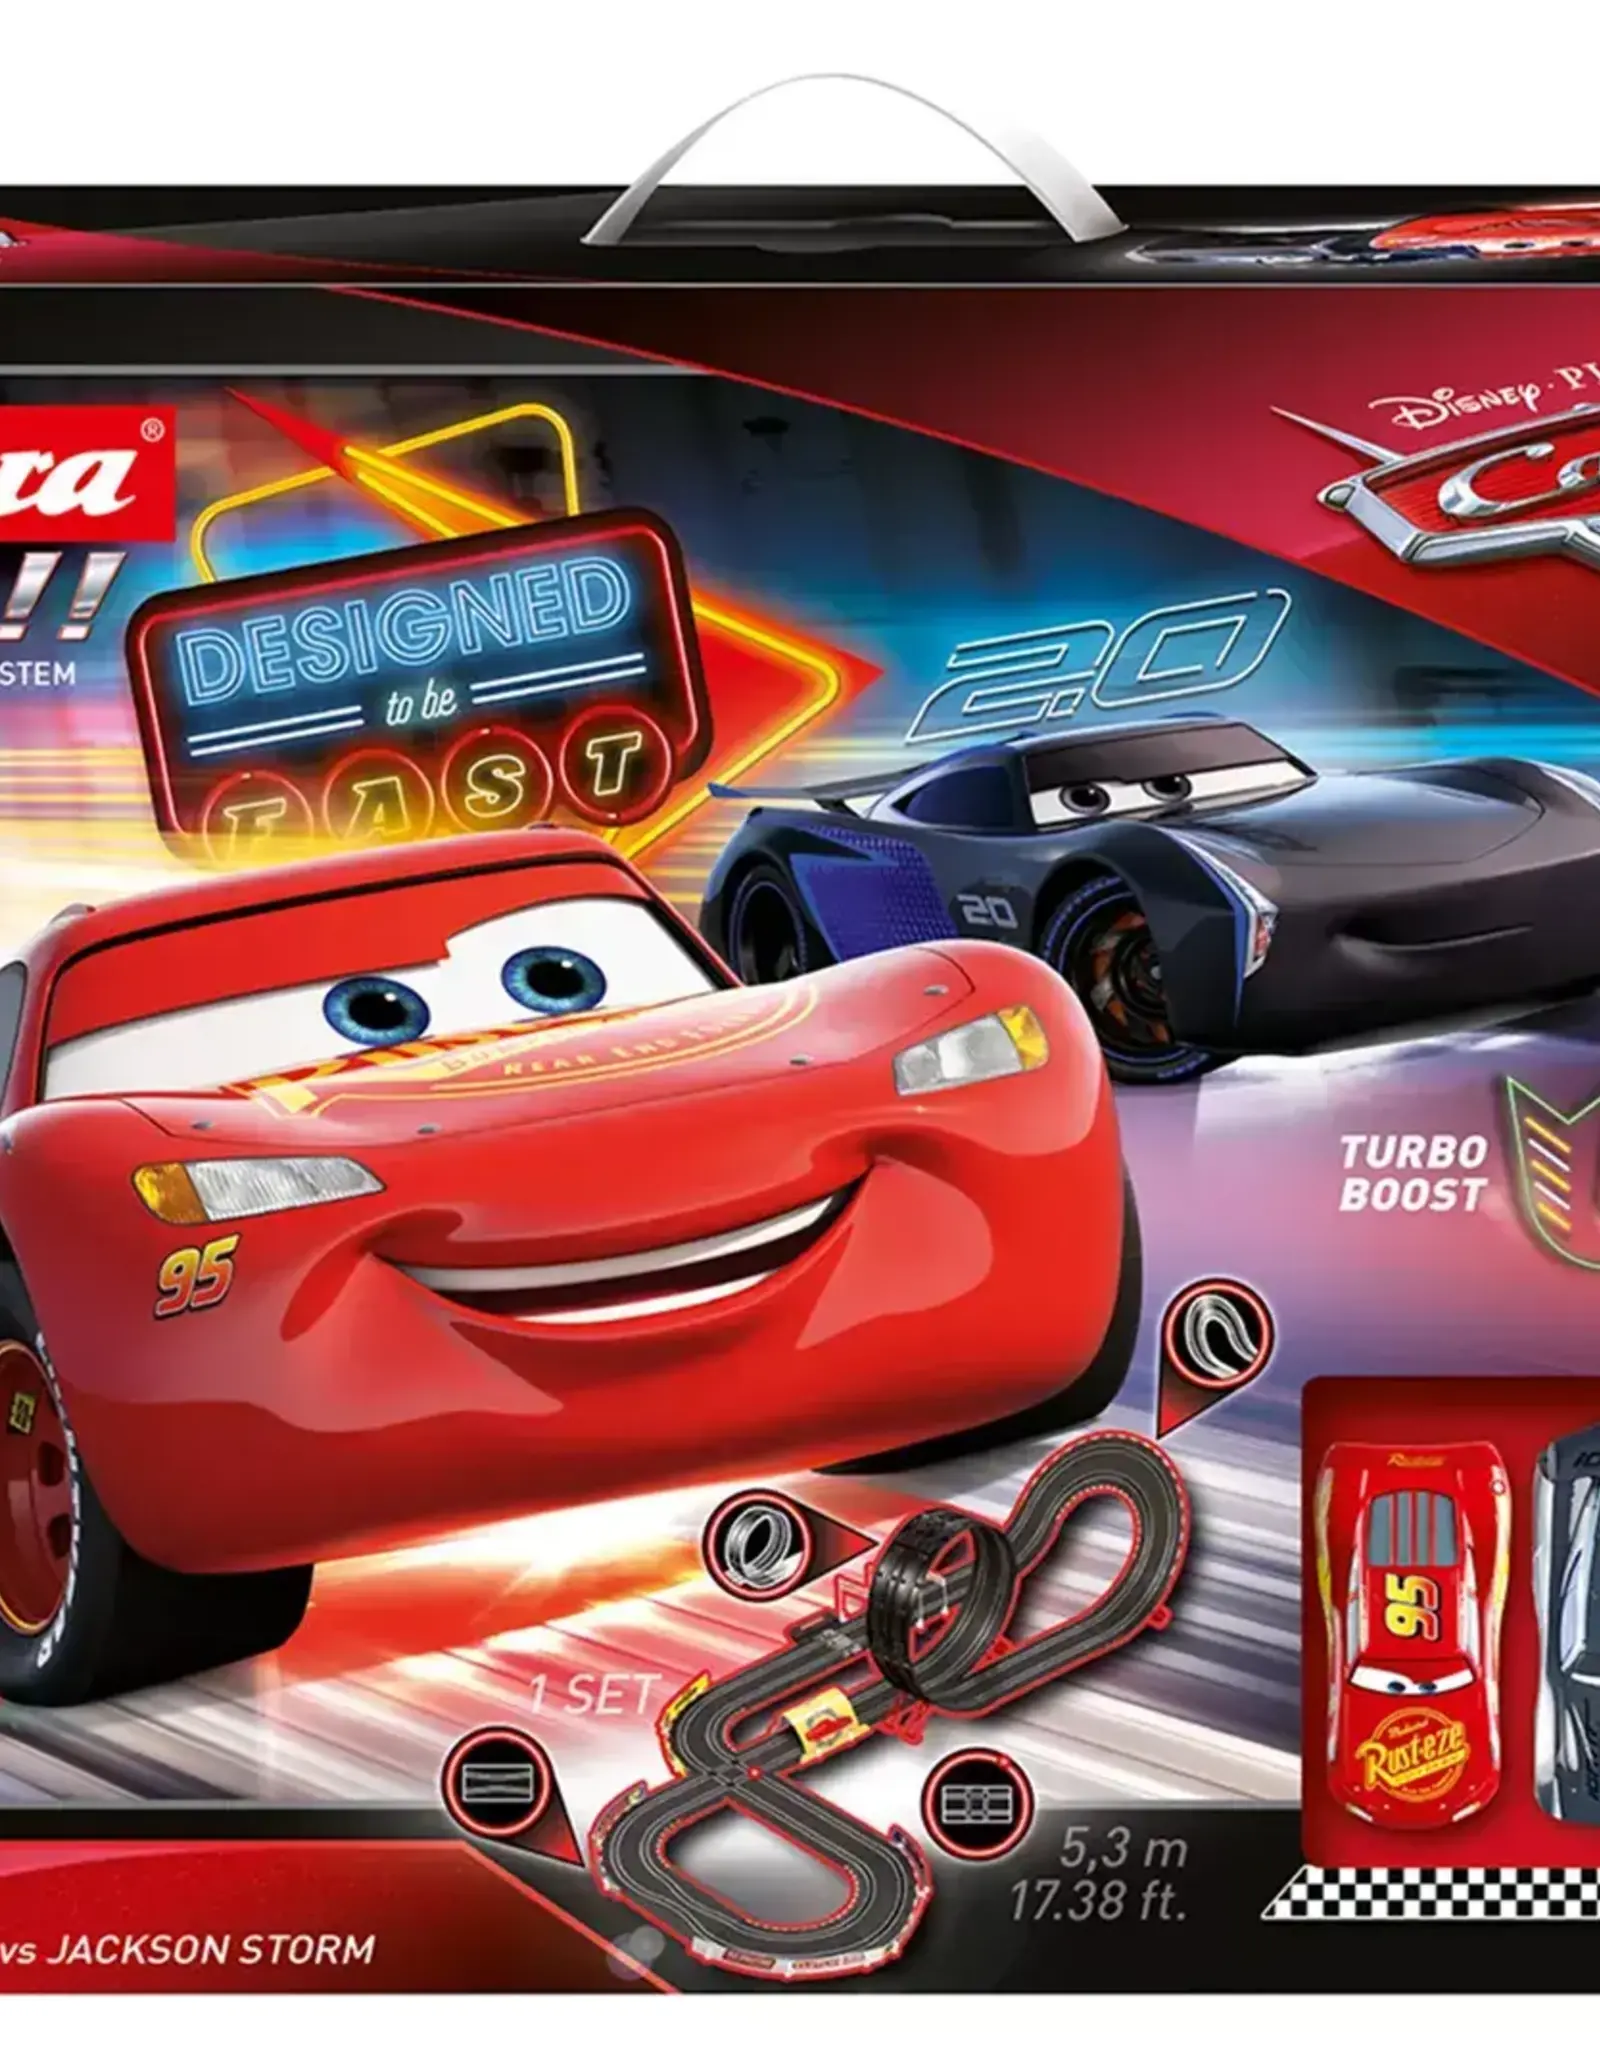 Carrera Disney·Pixar Cars - Neon Nights